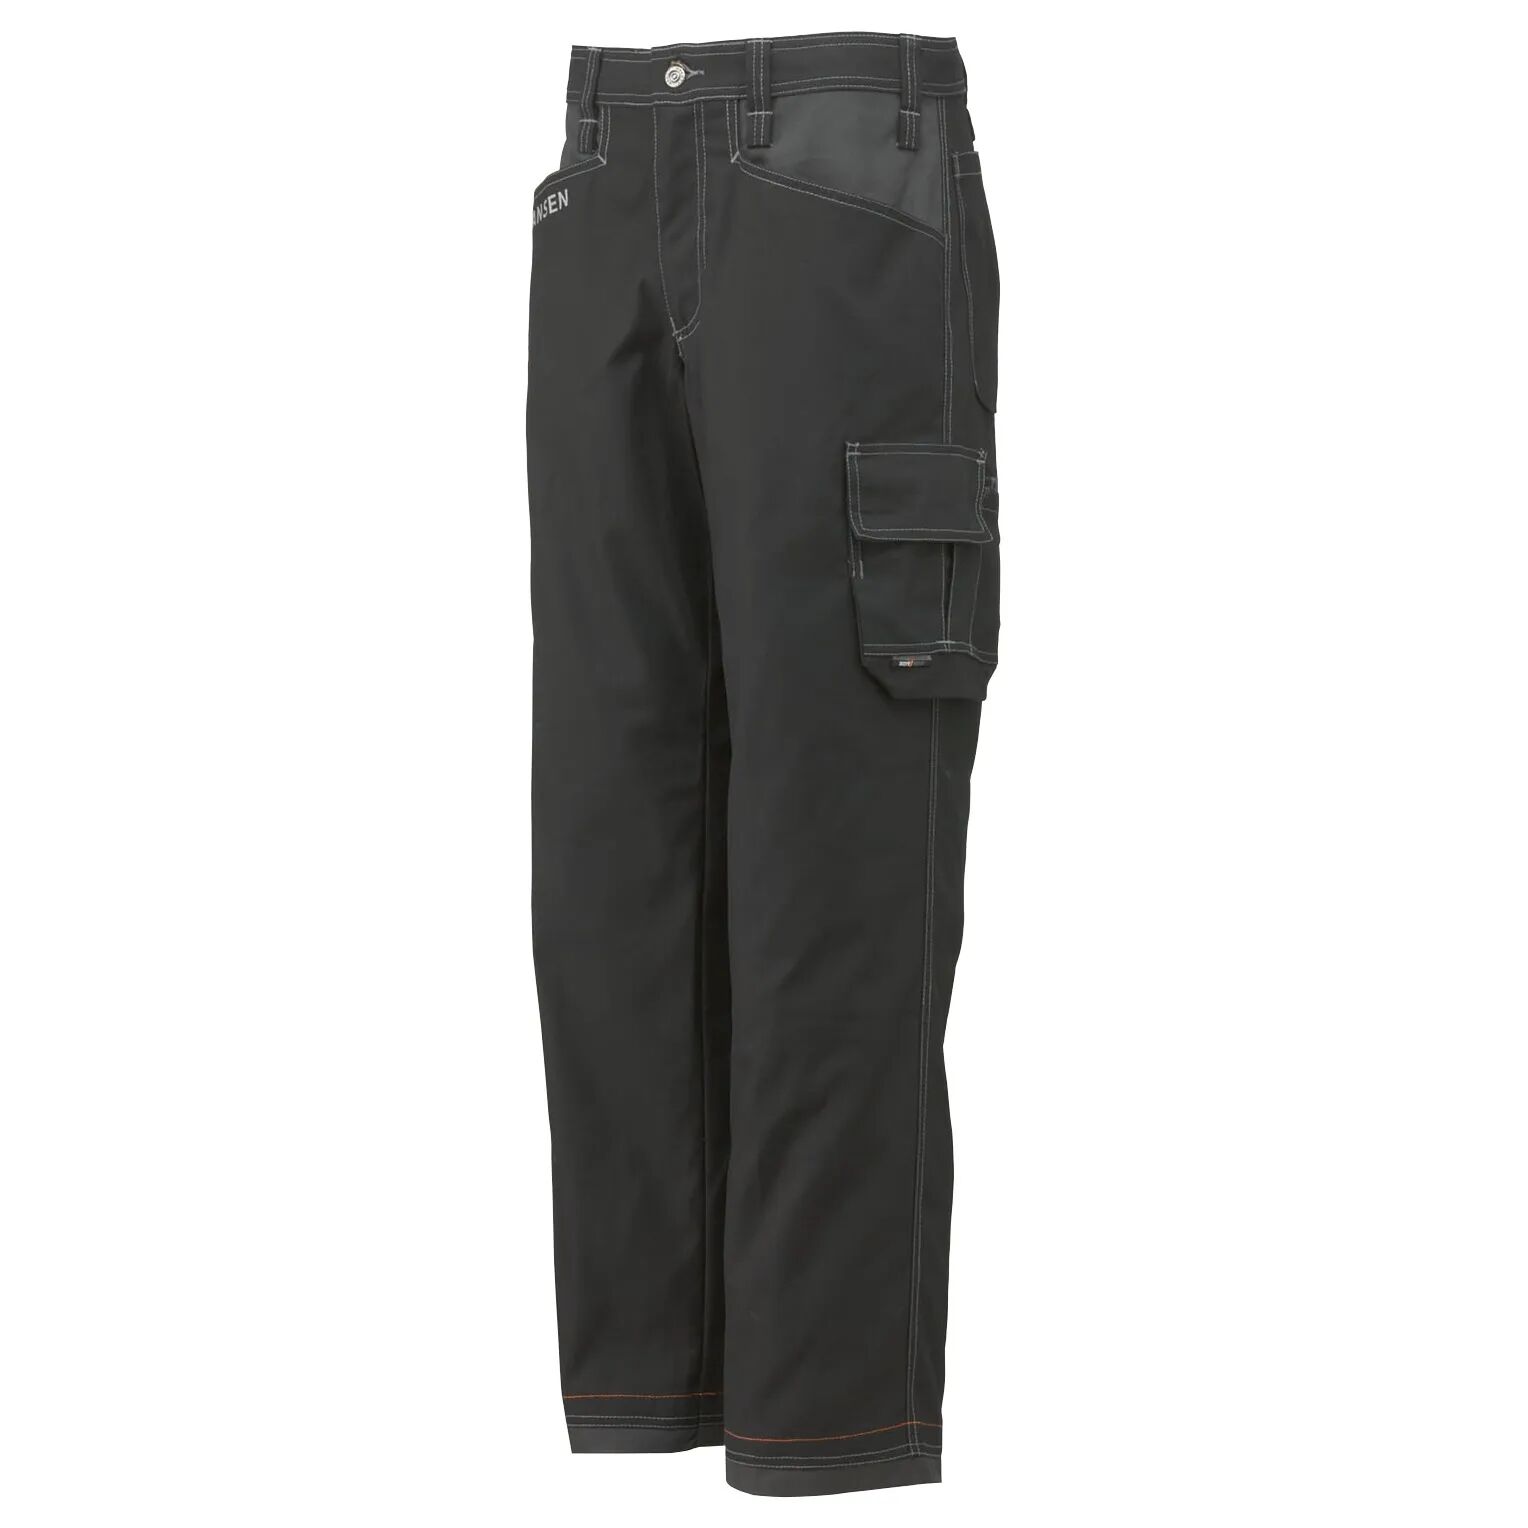 HH Workwear Helly Hansen WorkwearChelsea Condura Reinforced Service Pants Black 36/34